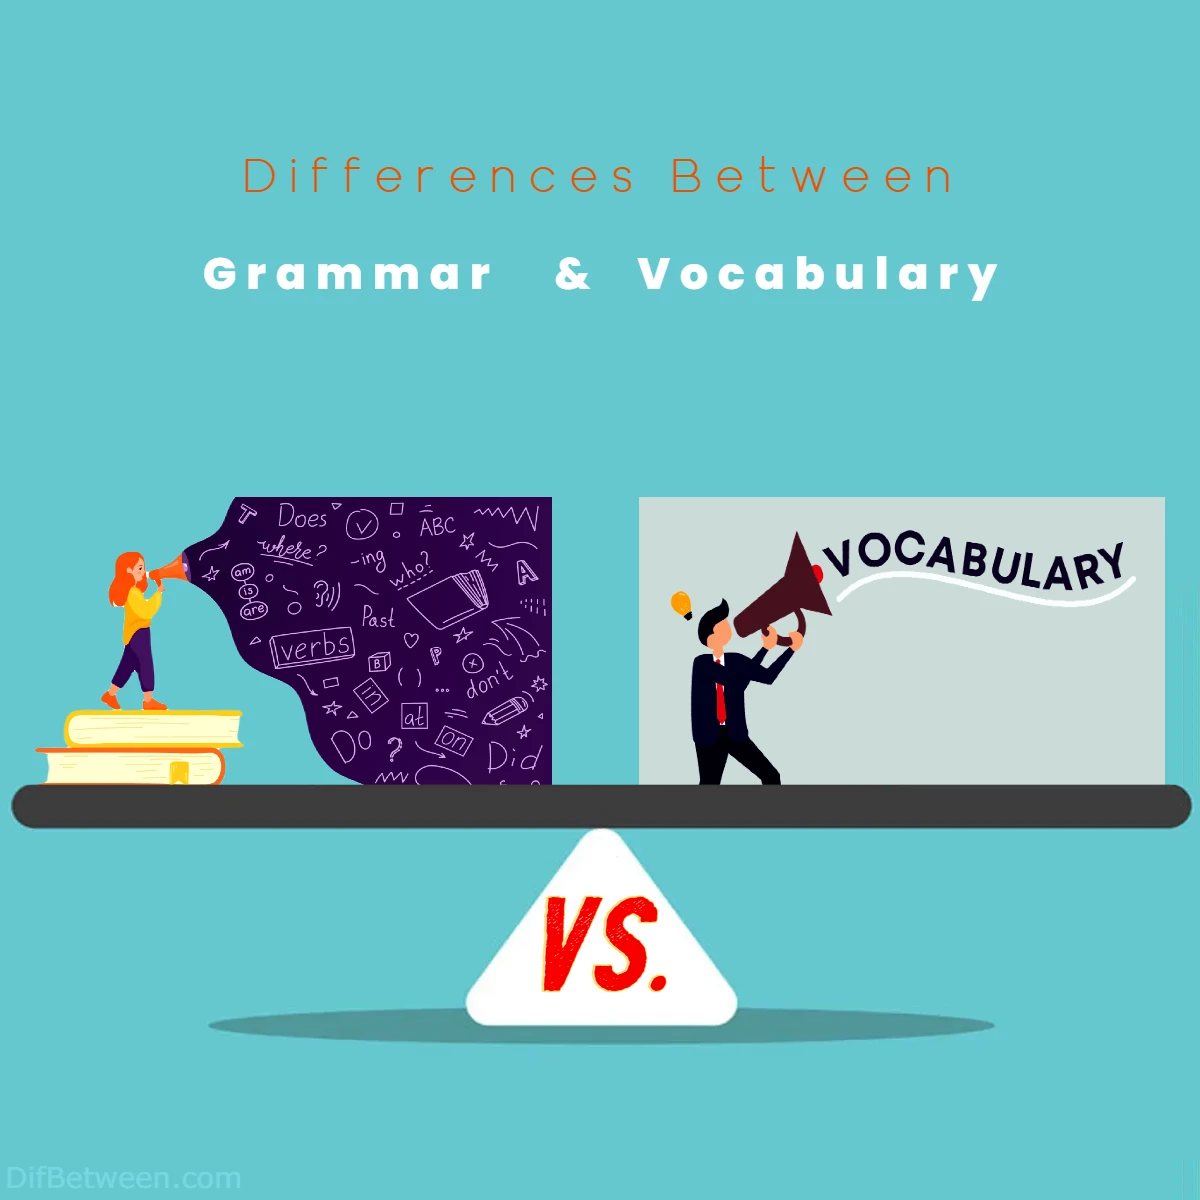 Differences Between Grammar vs Vocabulary